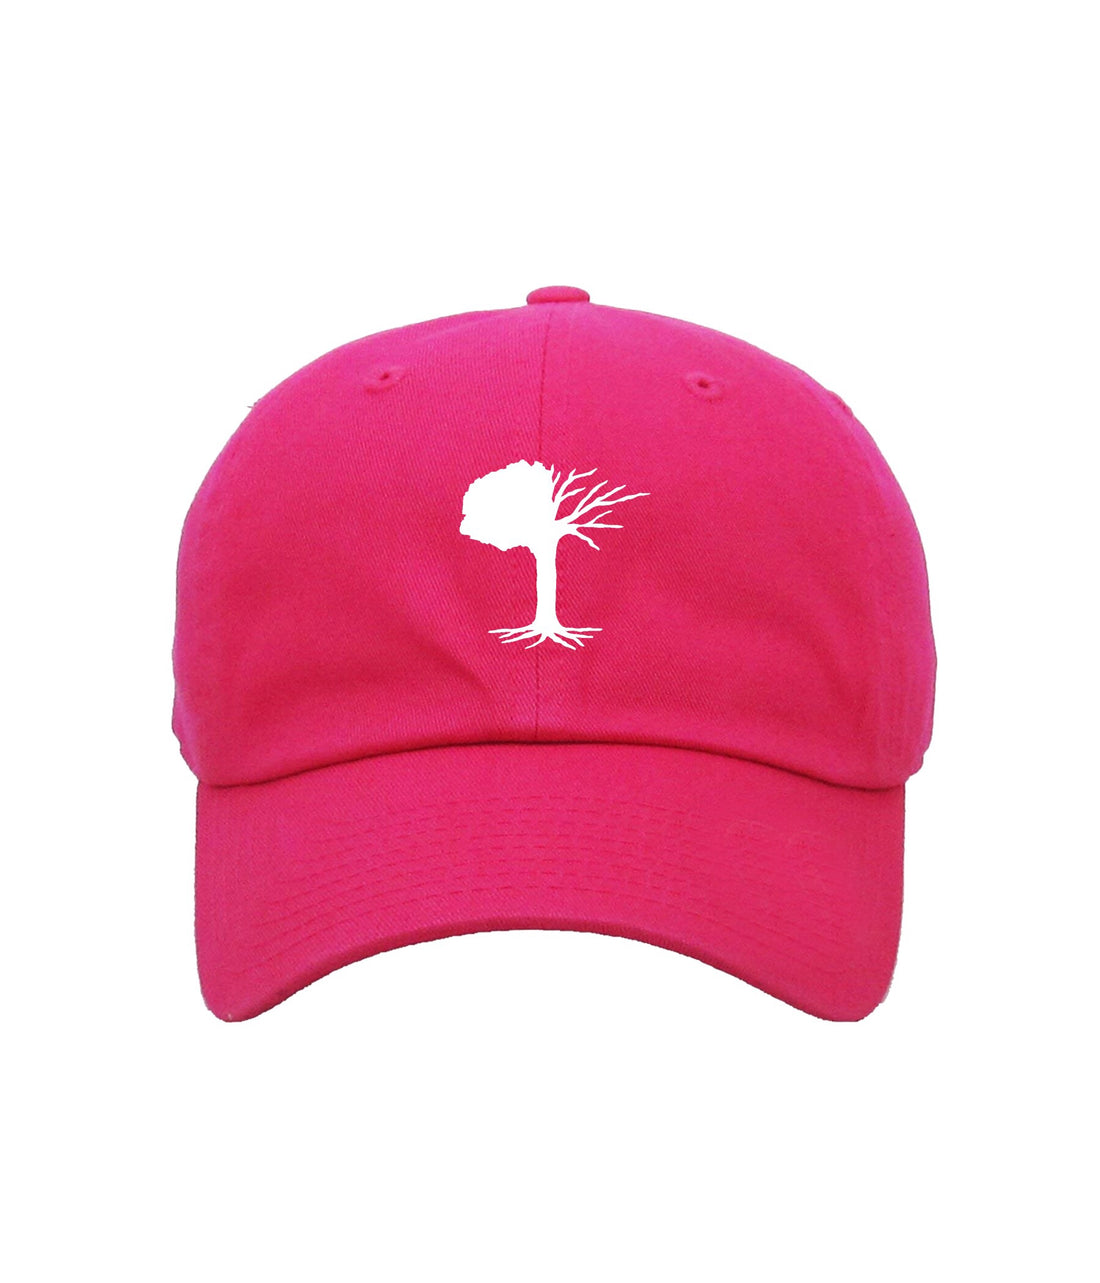 STEM Classic Sports Cap (Hot Pink) - STEM Clothing Group